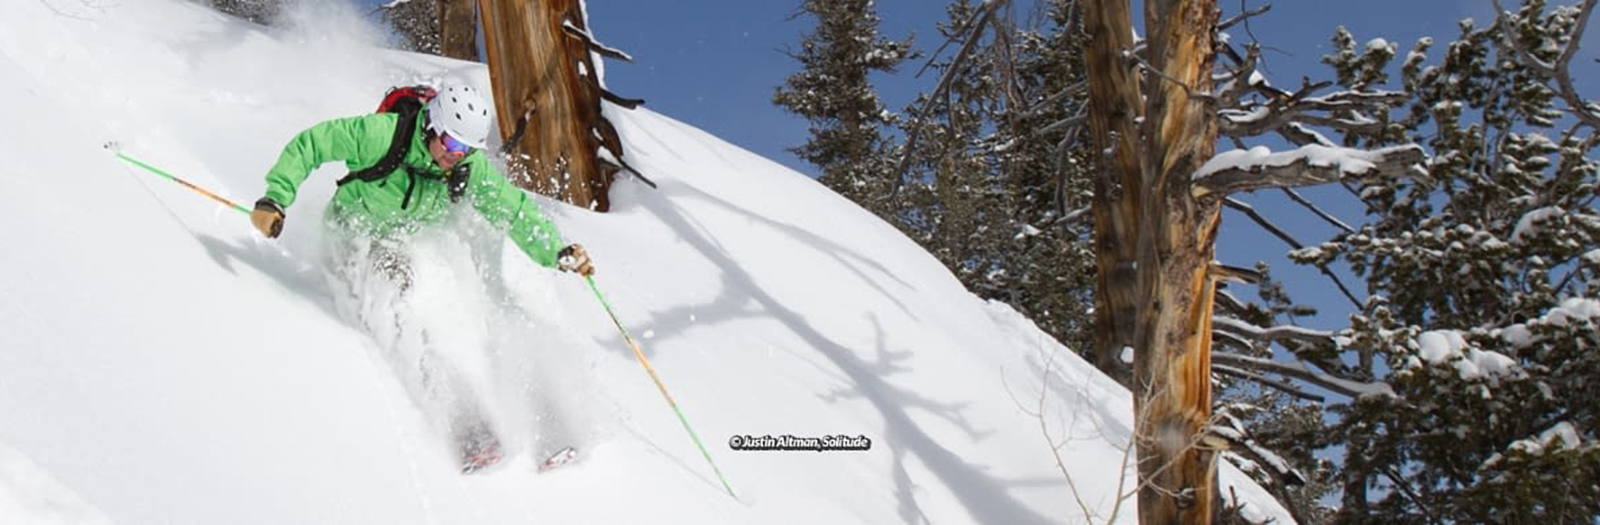 solitude resort beginner skiing